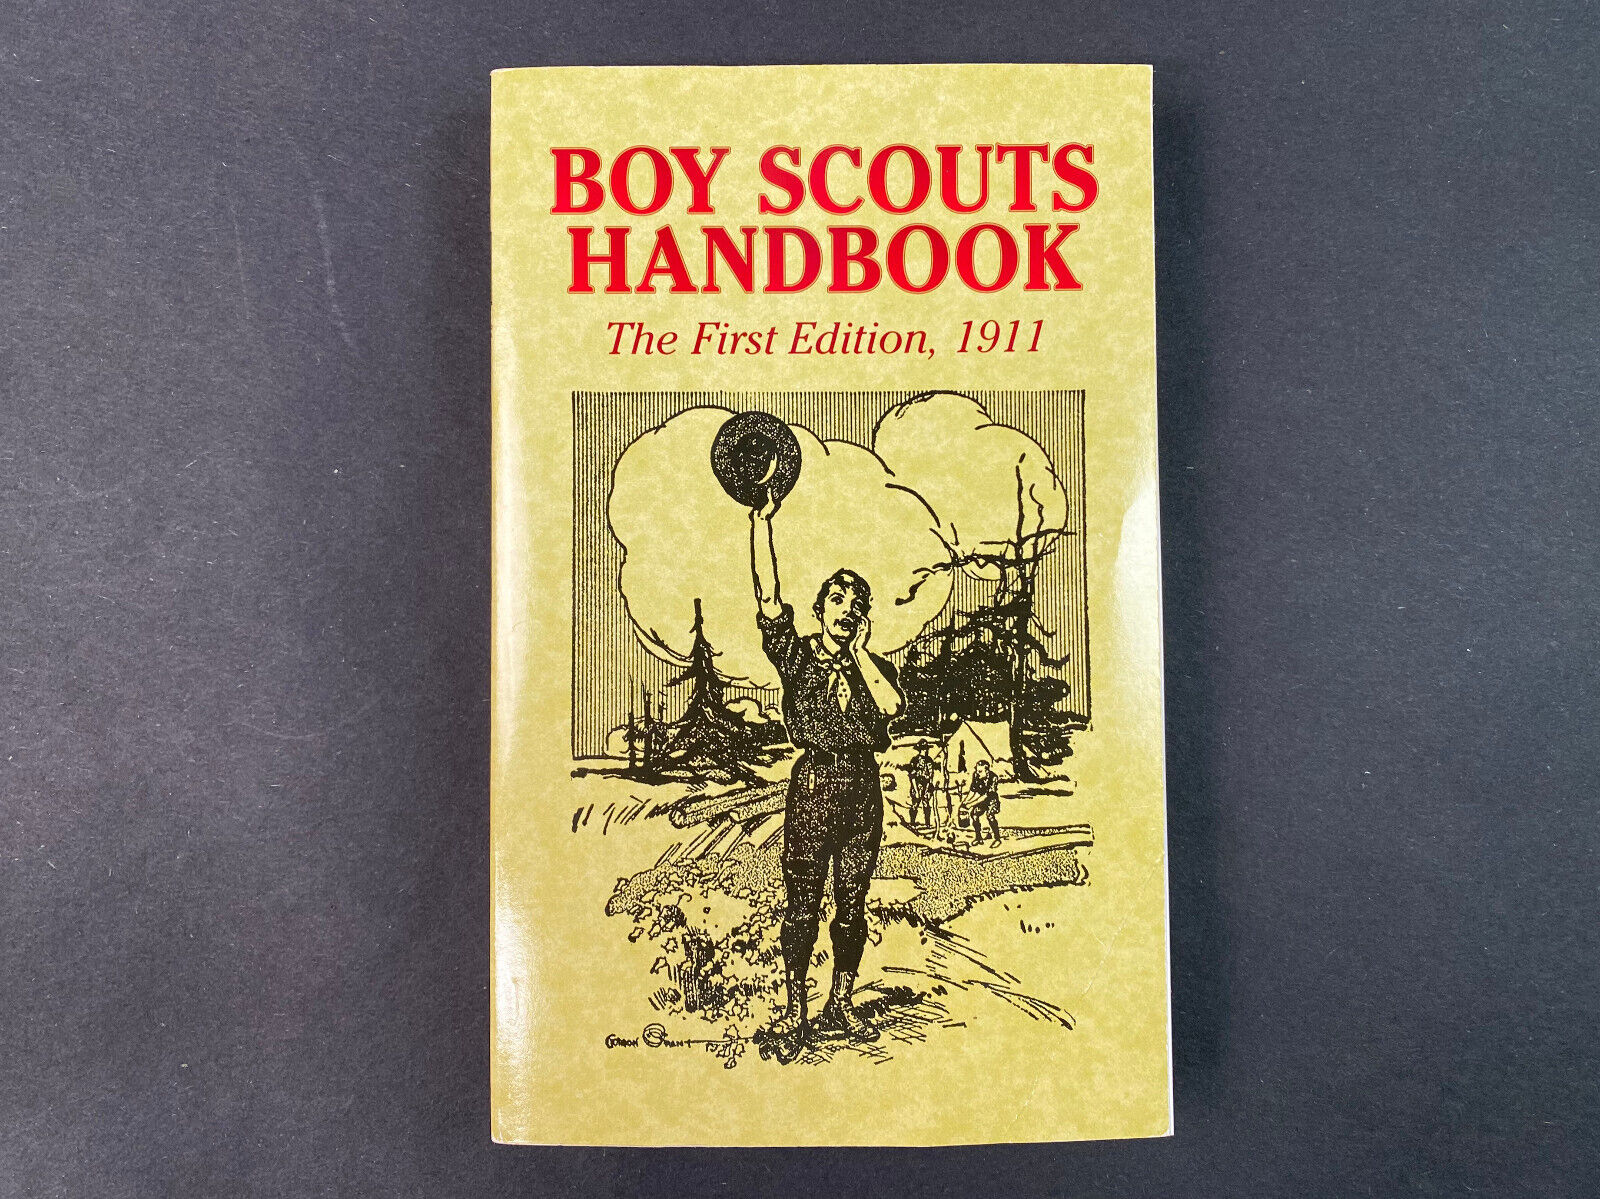 Boy Scout Handbook 1911 Reprint The First Edition, Paperback BSA Scouts